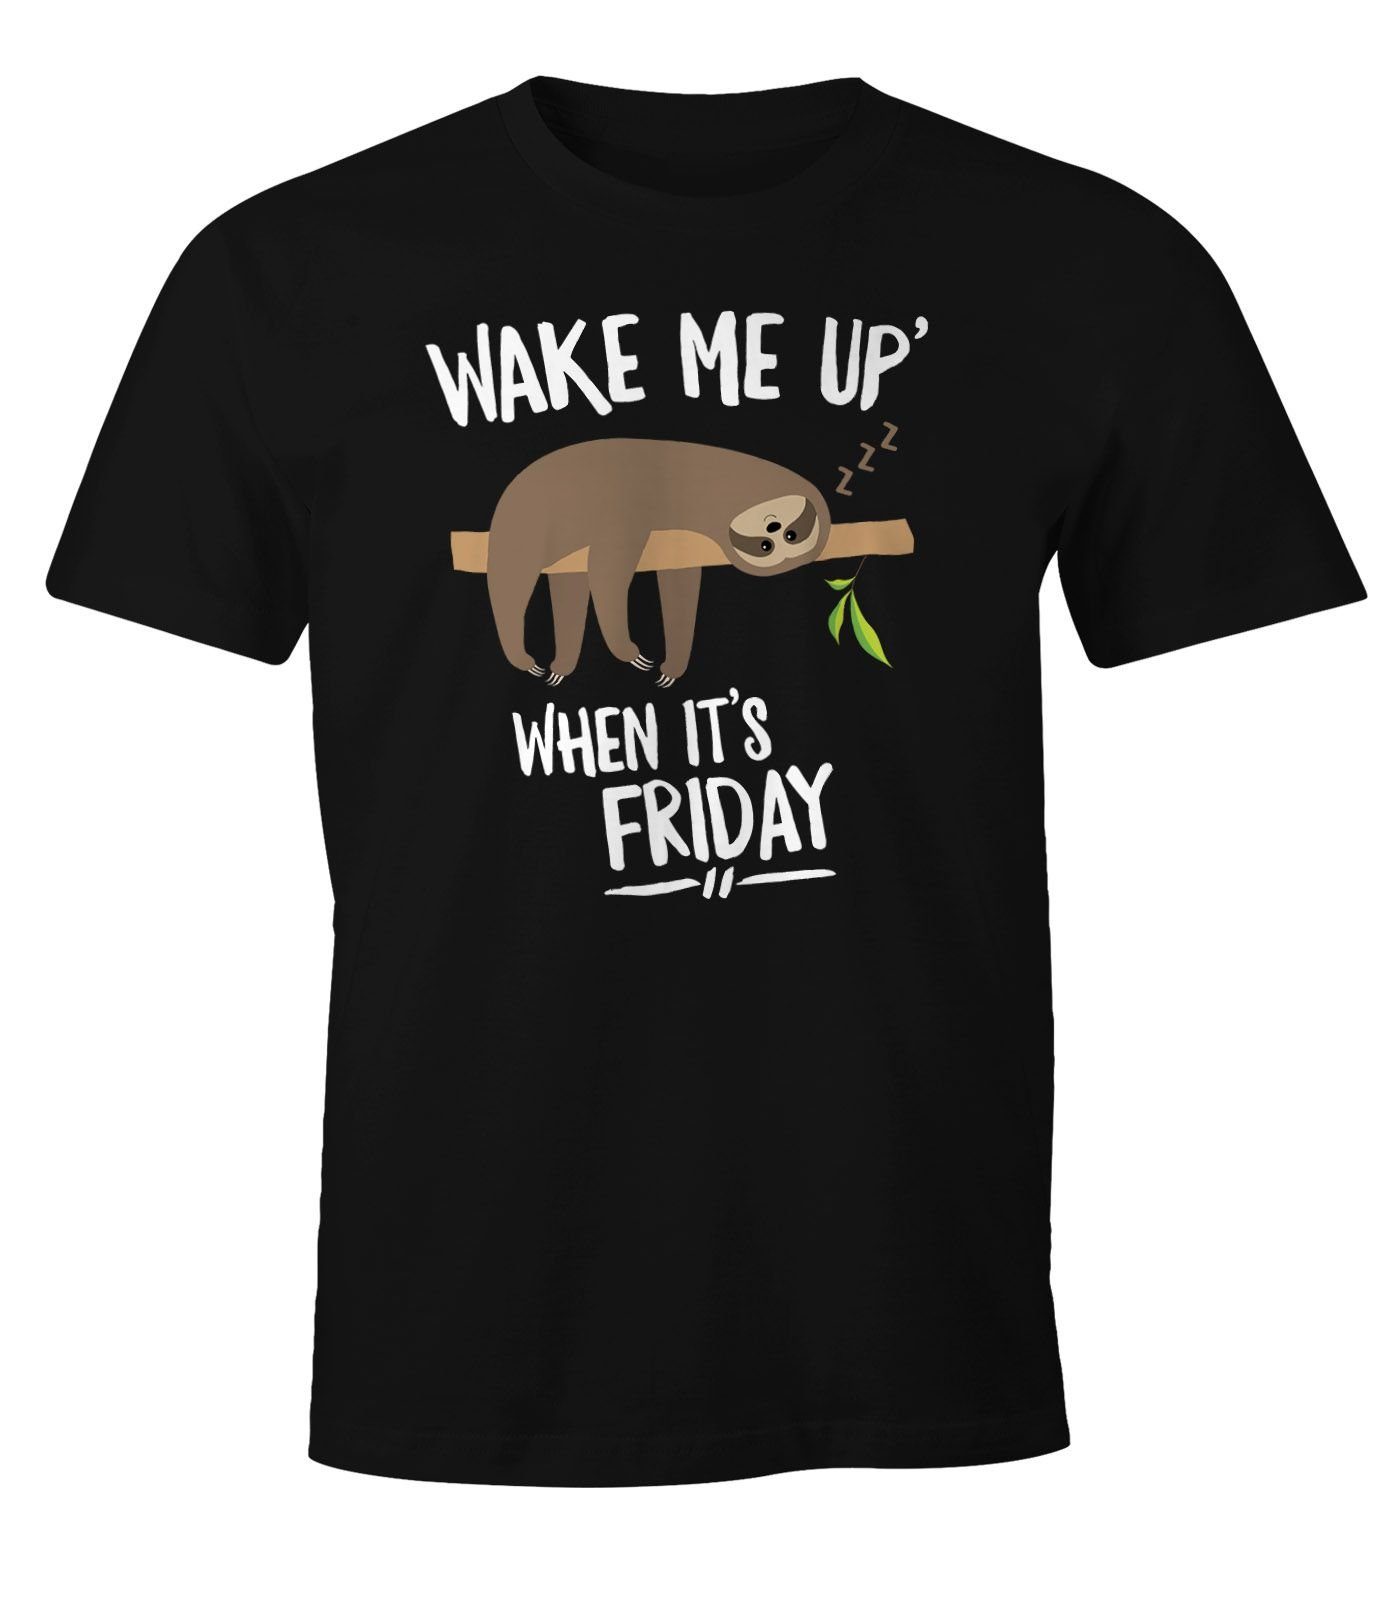 Friday Fun-Shirt it's Moonworks® when schwarz mit Wake Sloth me Print-Shirt T-Shirt Faultier Print MoonWorks up Herren